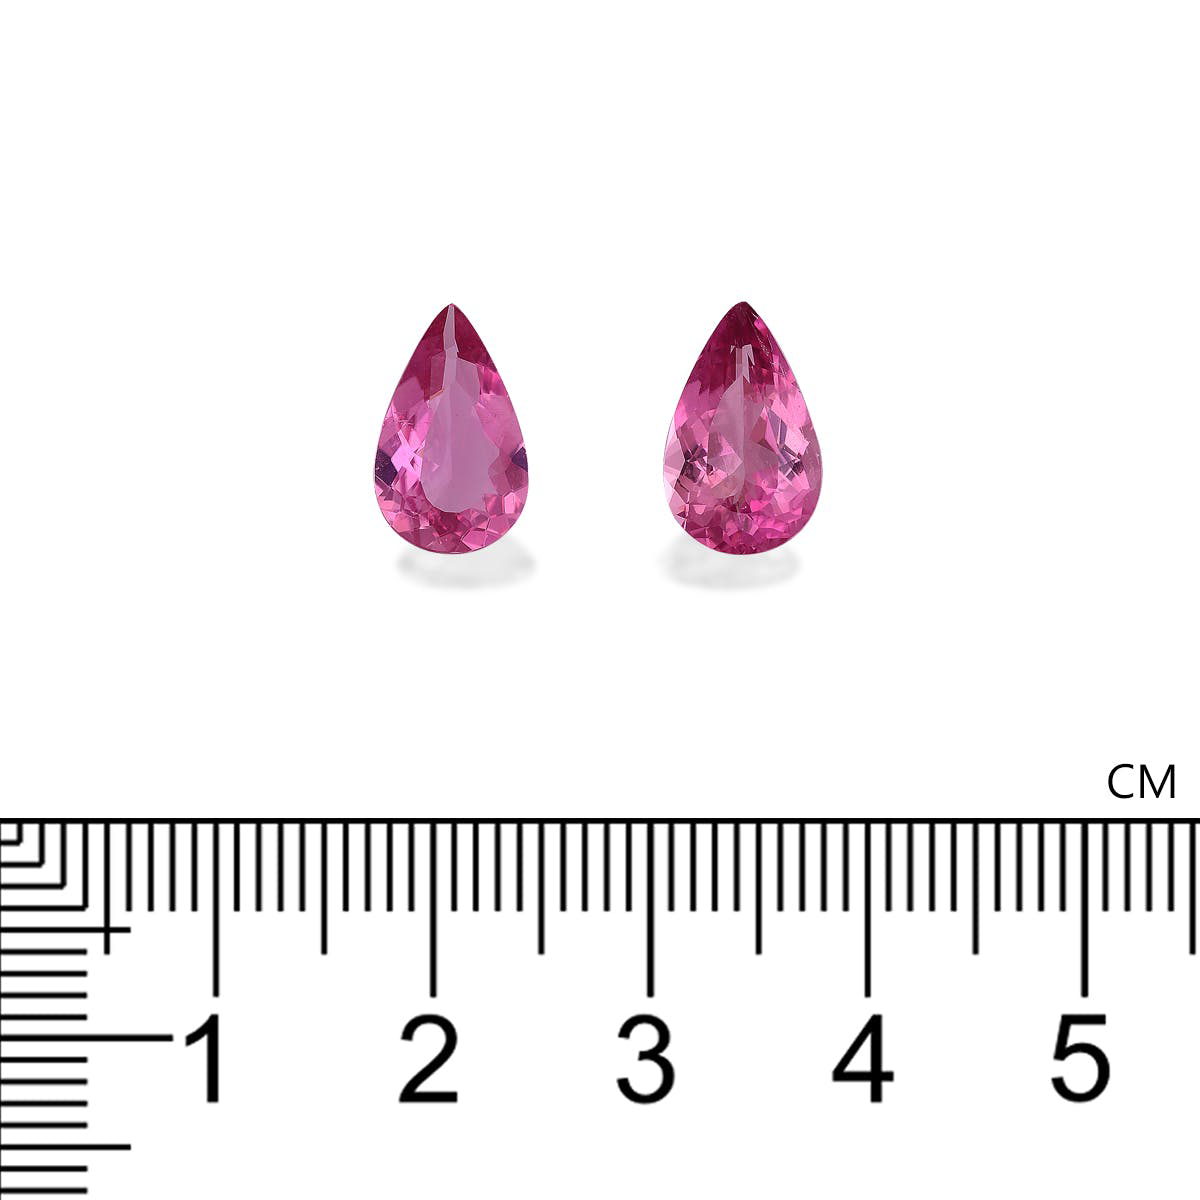 Picture of Bubblegum Pink Rubellite Tourmaline 3.86ct - Pair (RL1263)